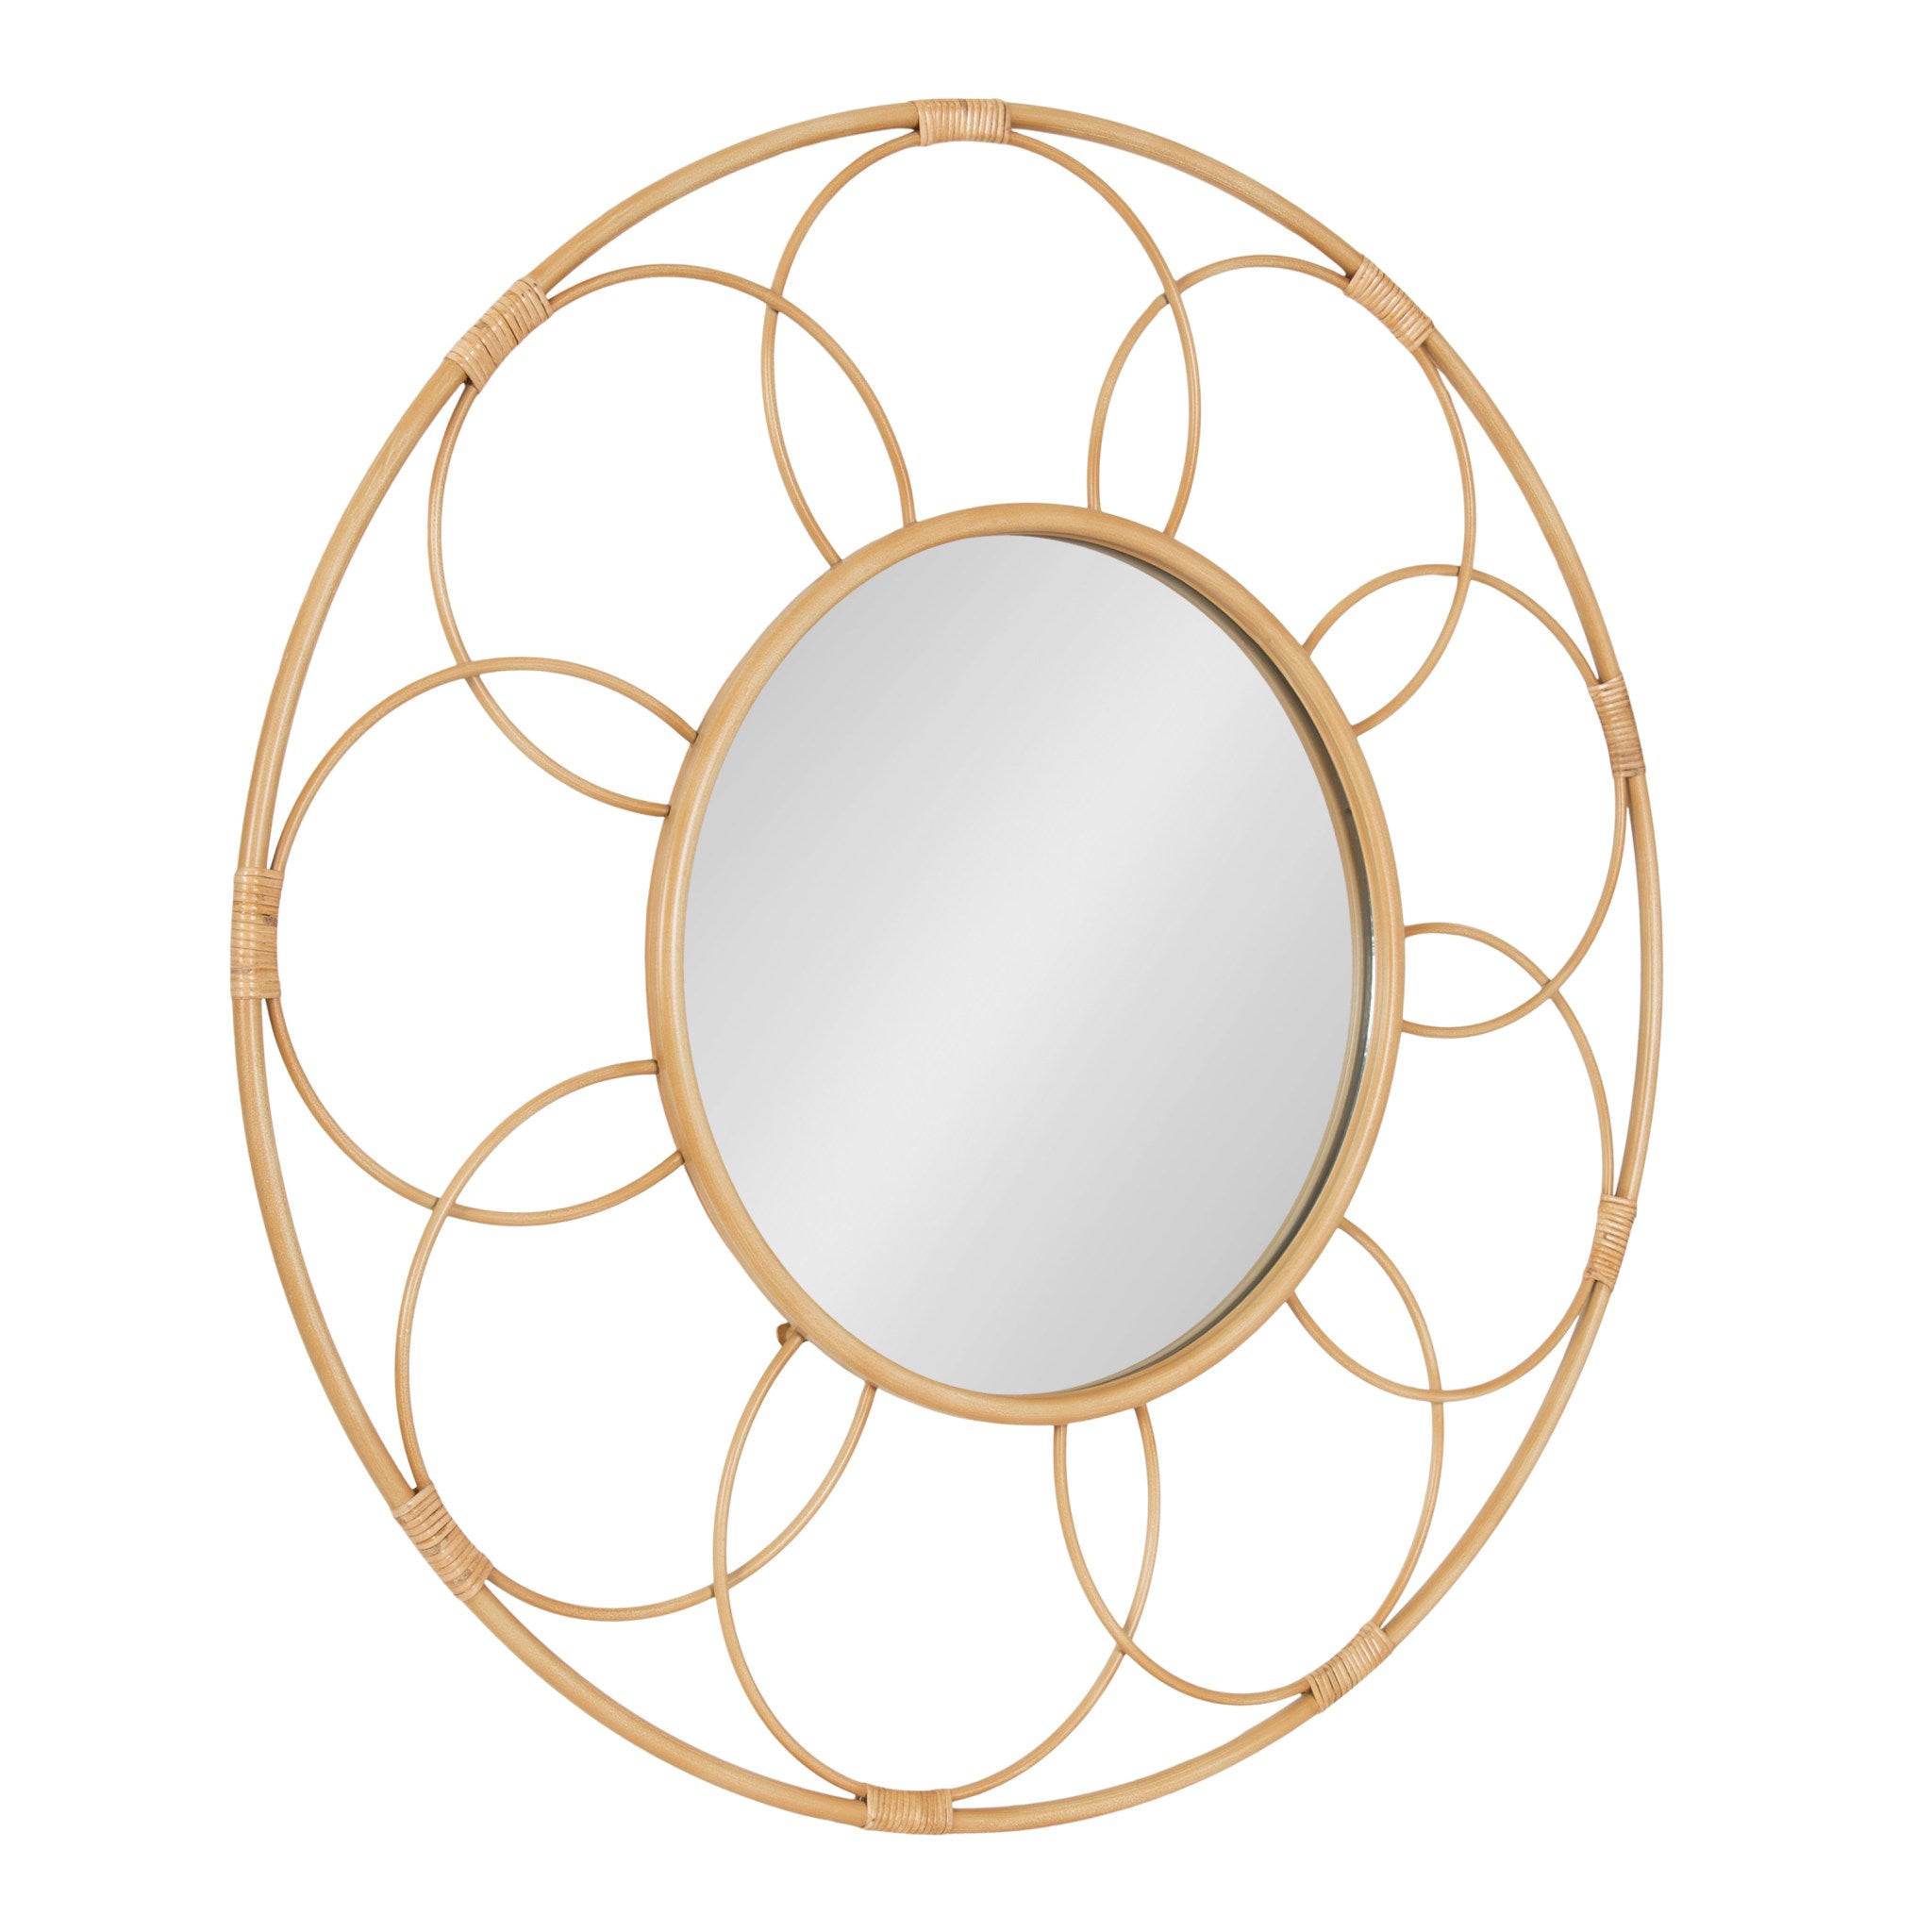 Cori Round Rattan Mirror